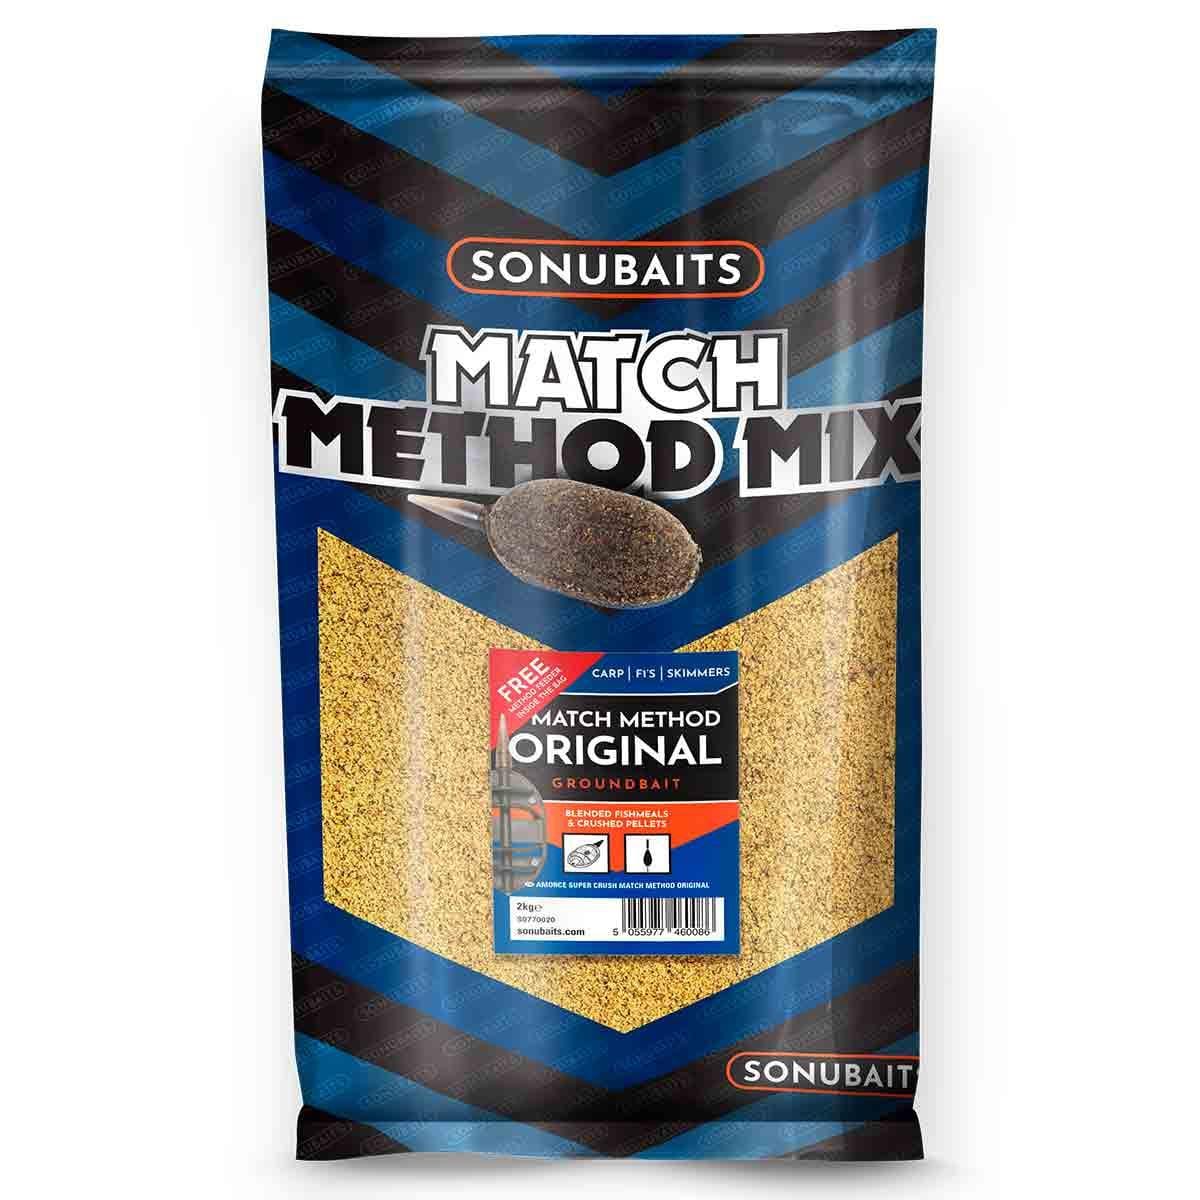 Sonubaits Match Method Mix Original (2kg)